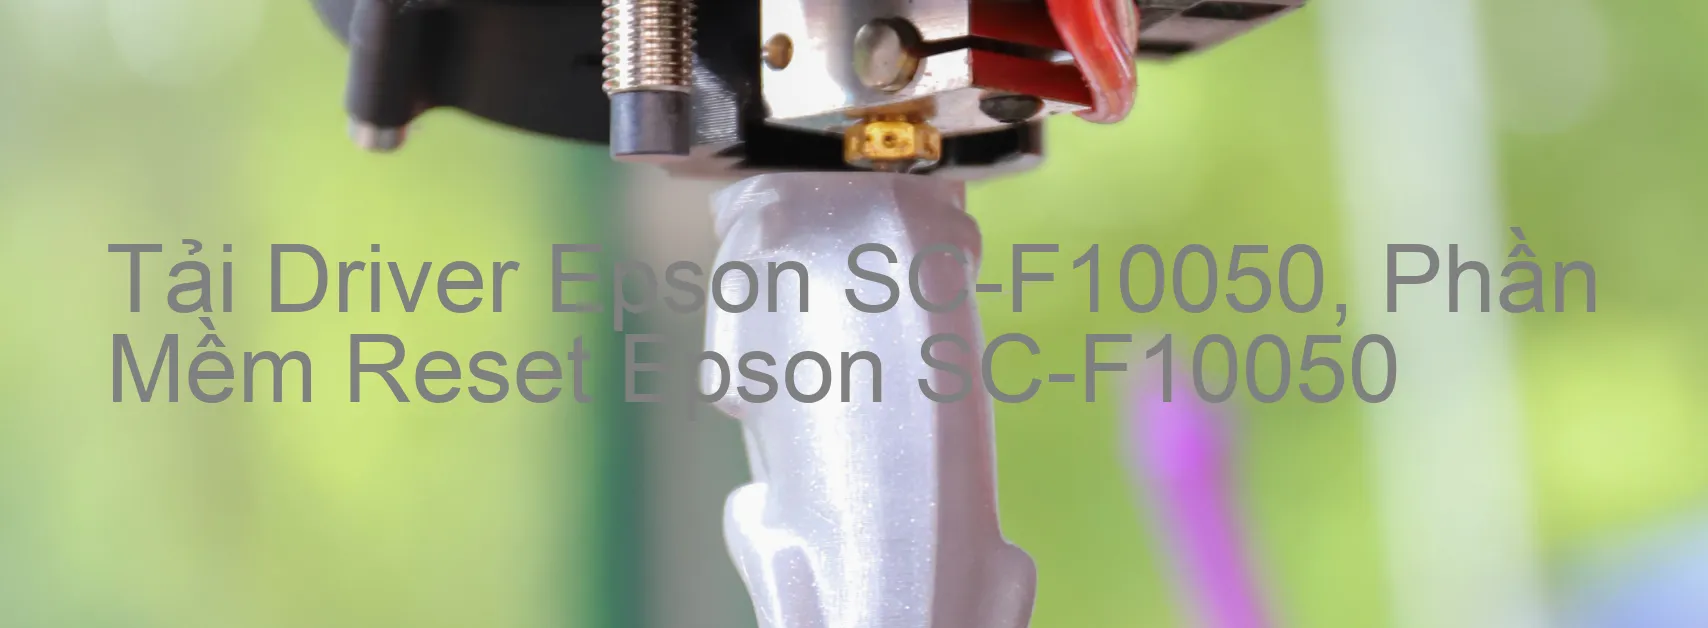 Driver Epson SC-F10050, Phần Mềm Reset Epson SC-F10050